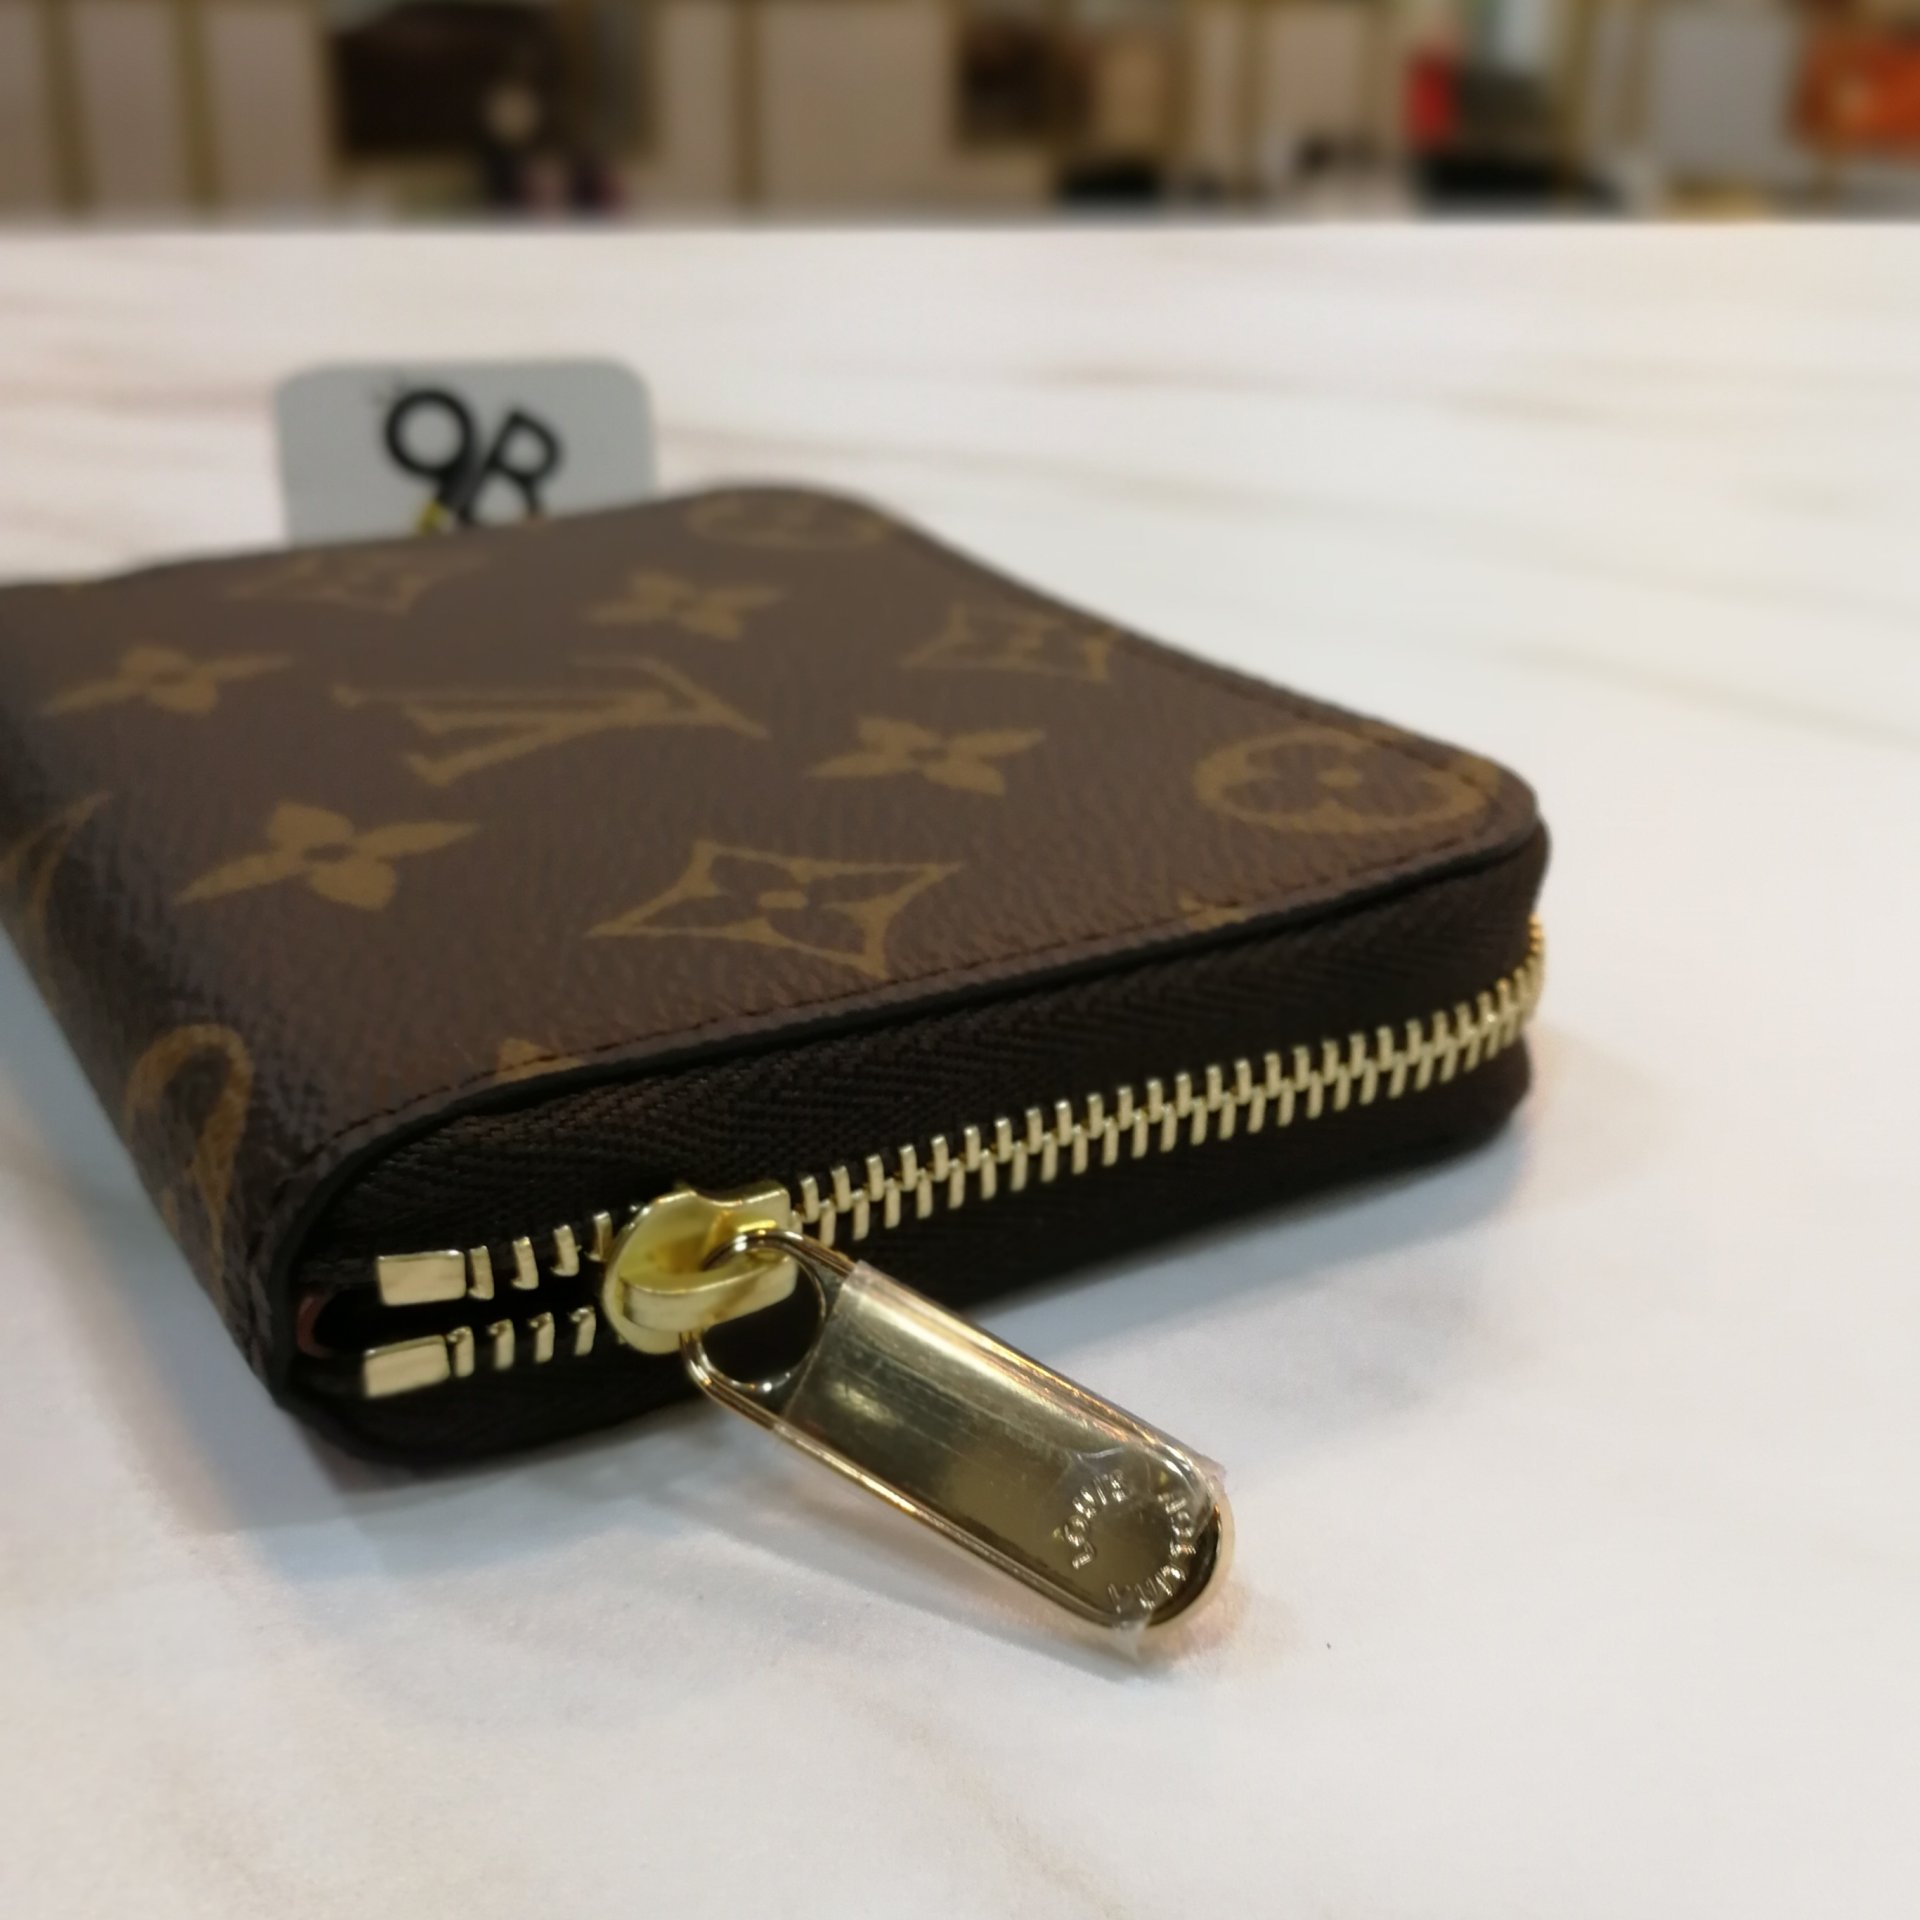 Shop Louis Vuitton ZIPPY COIN PURSE Zippy coin purse (M60067) by babybbb